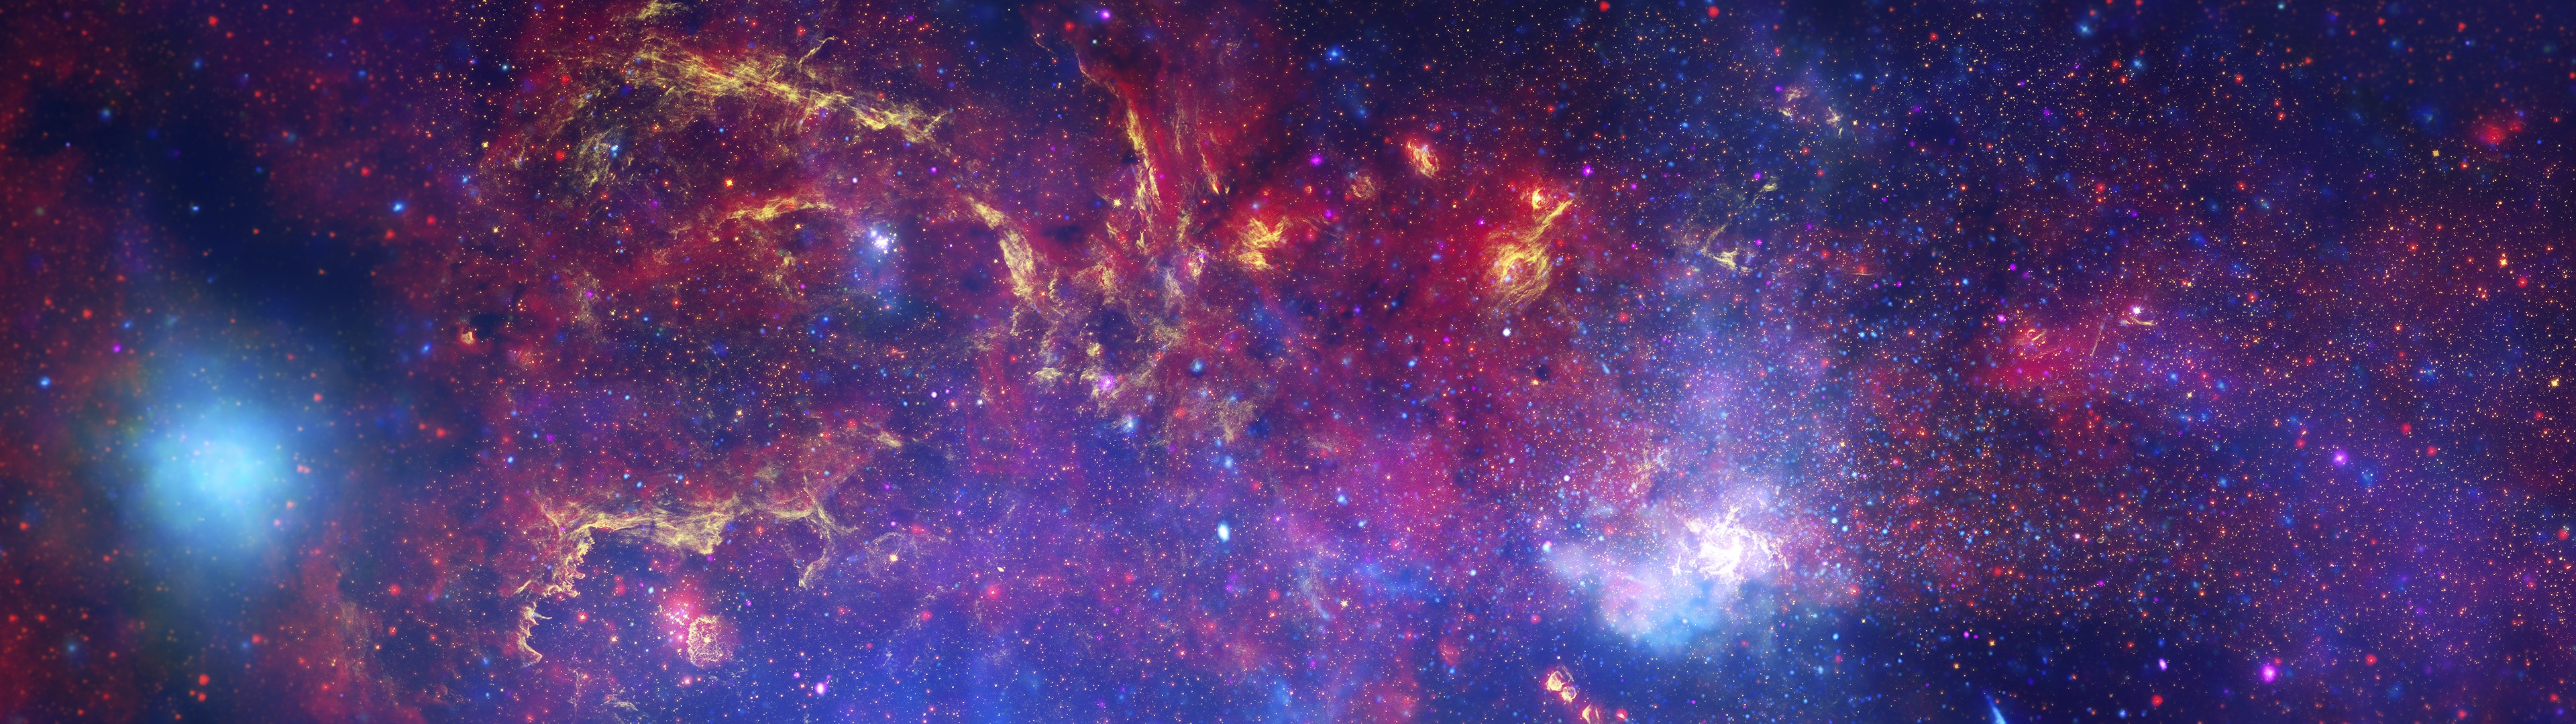 General 3840x1080 multiple display space stars colorful universe galaxy digital art space art